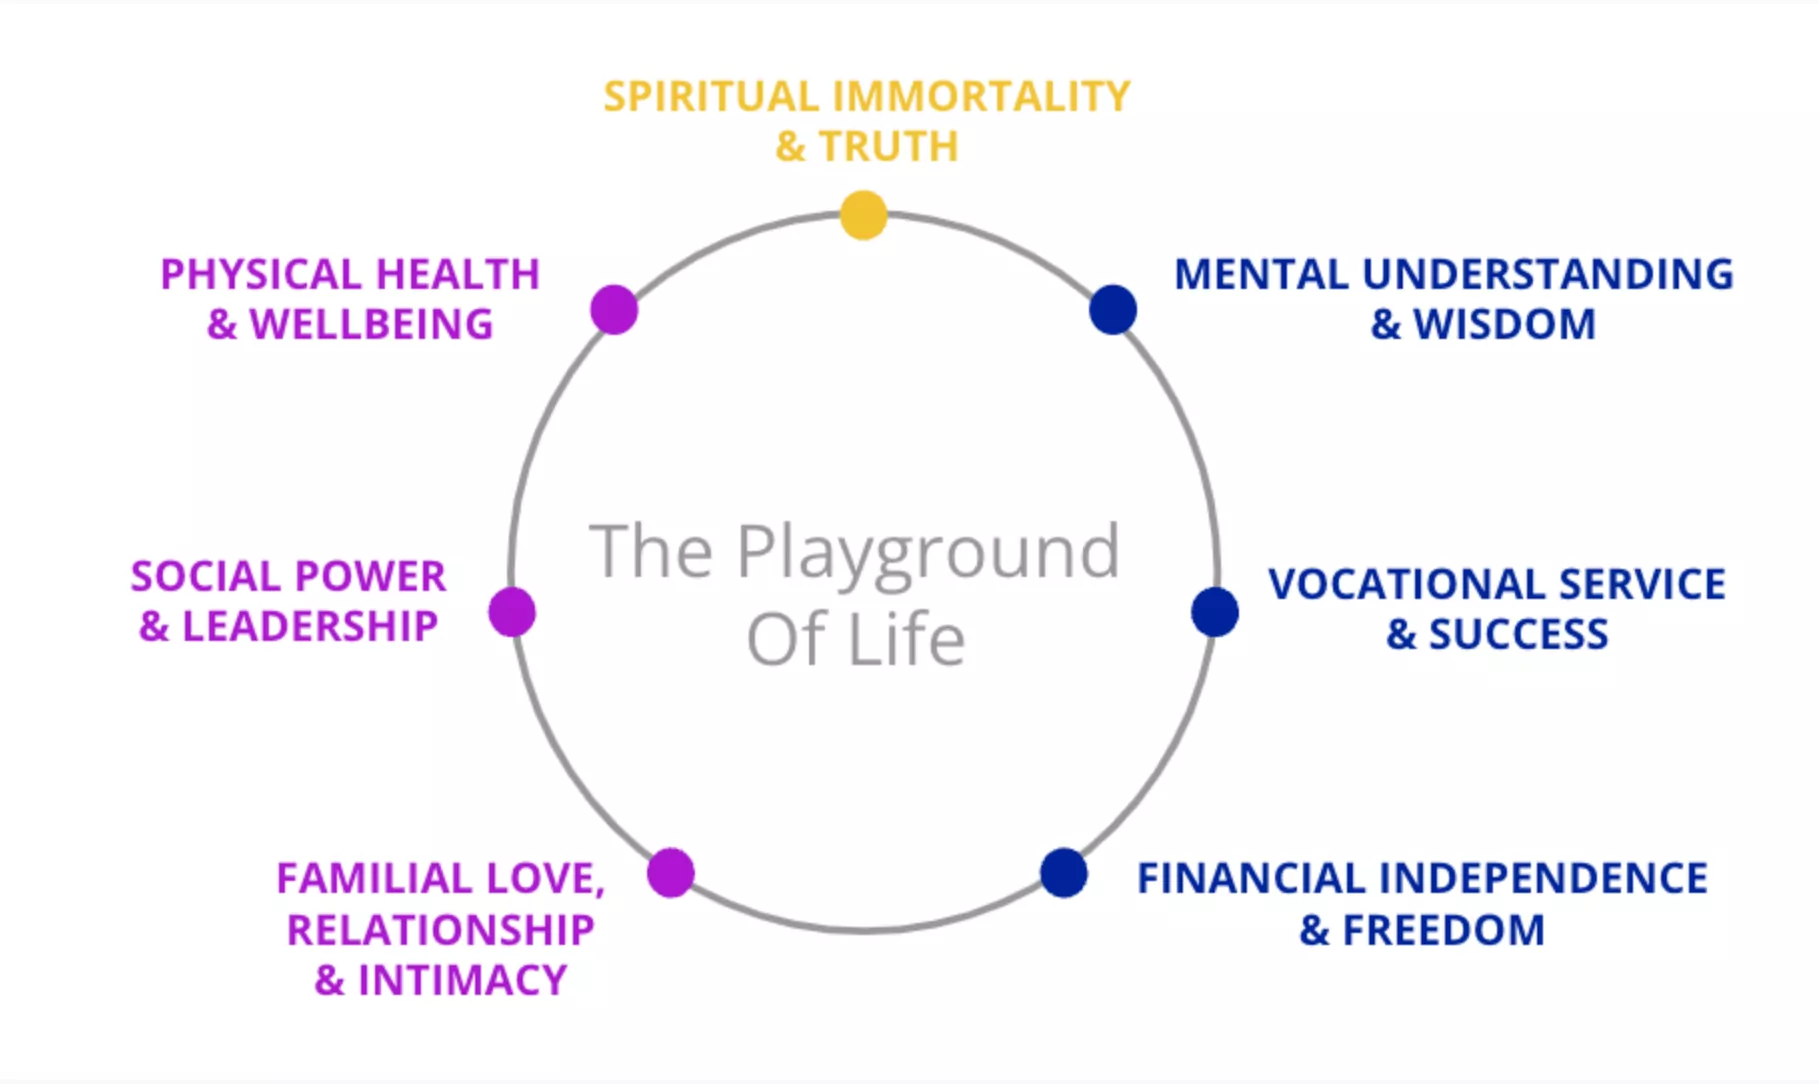 The Playground of Life